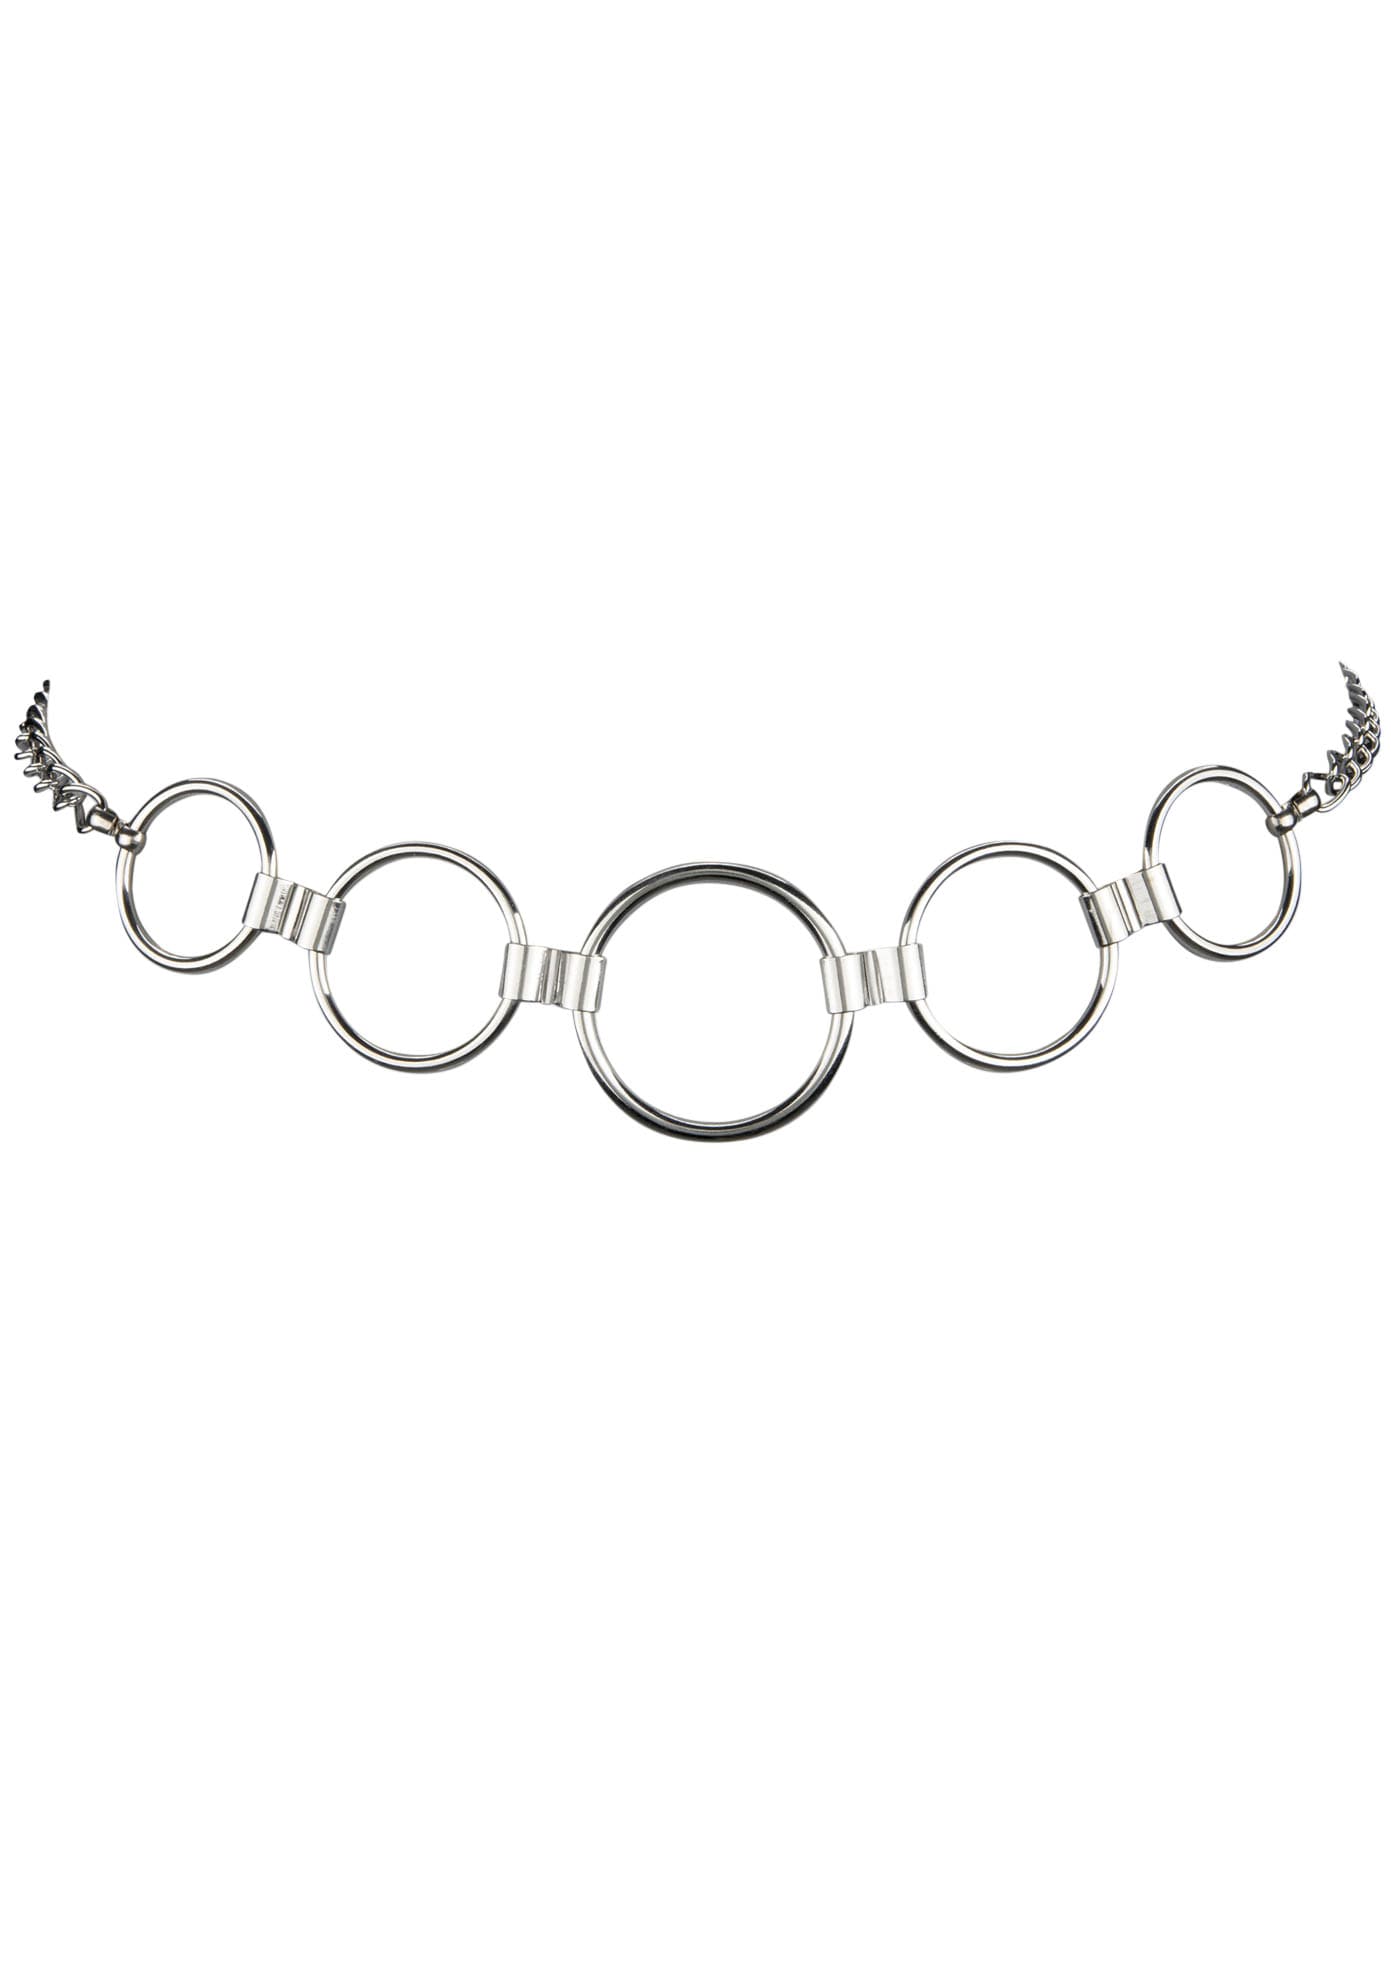 Kettengürtel, in elegant abgestuftem Ringdesign